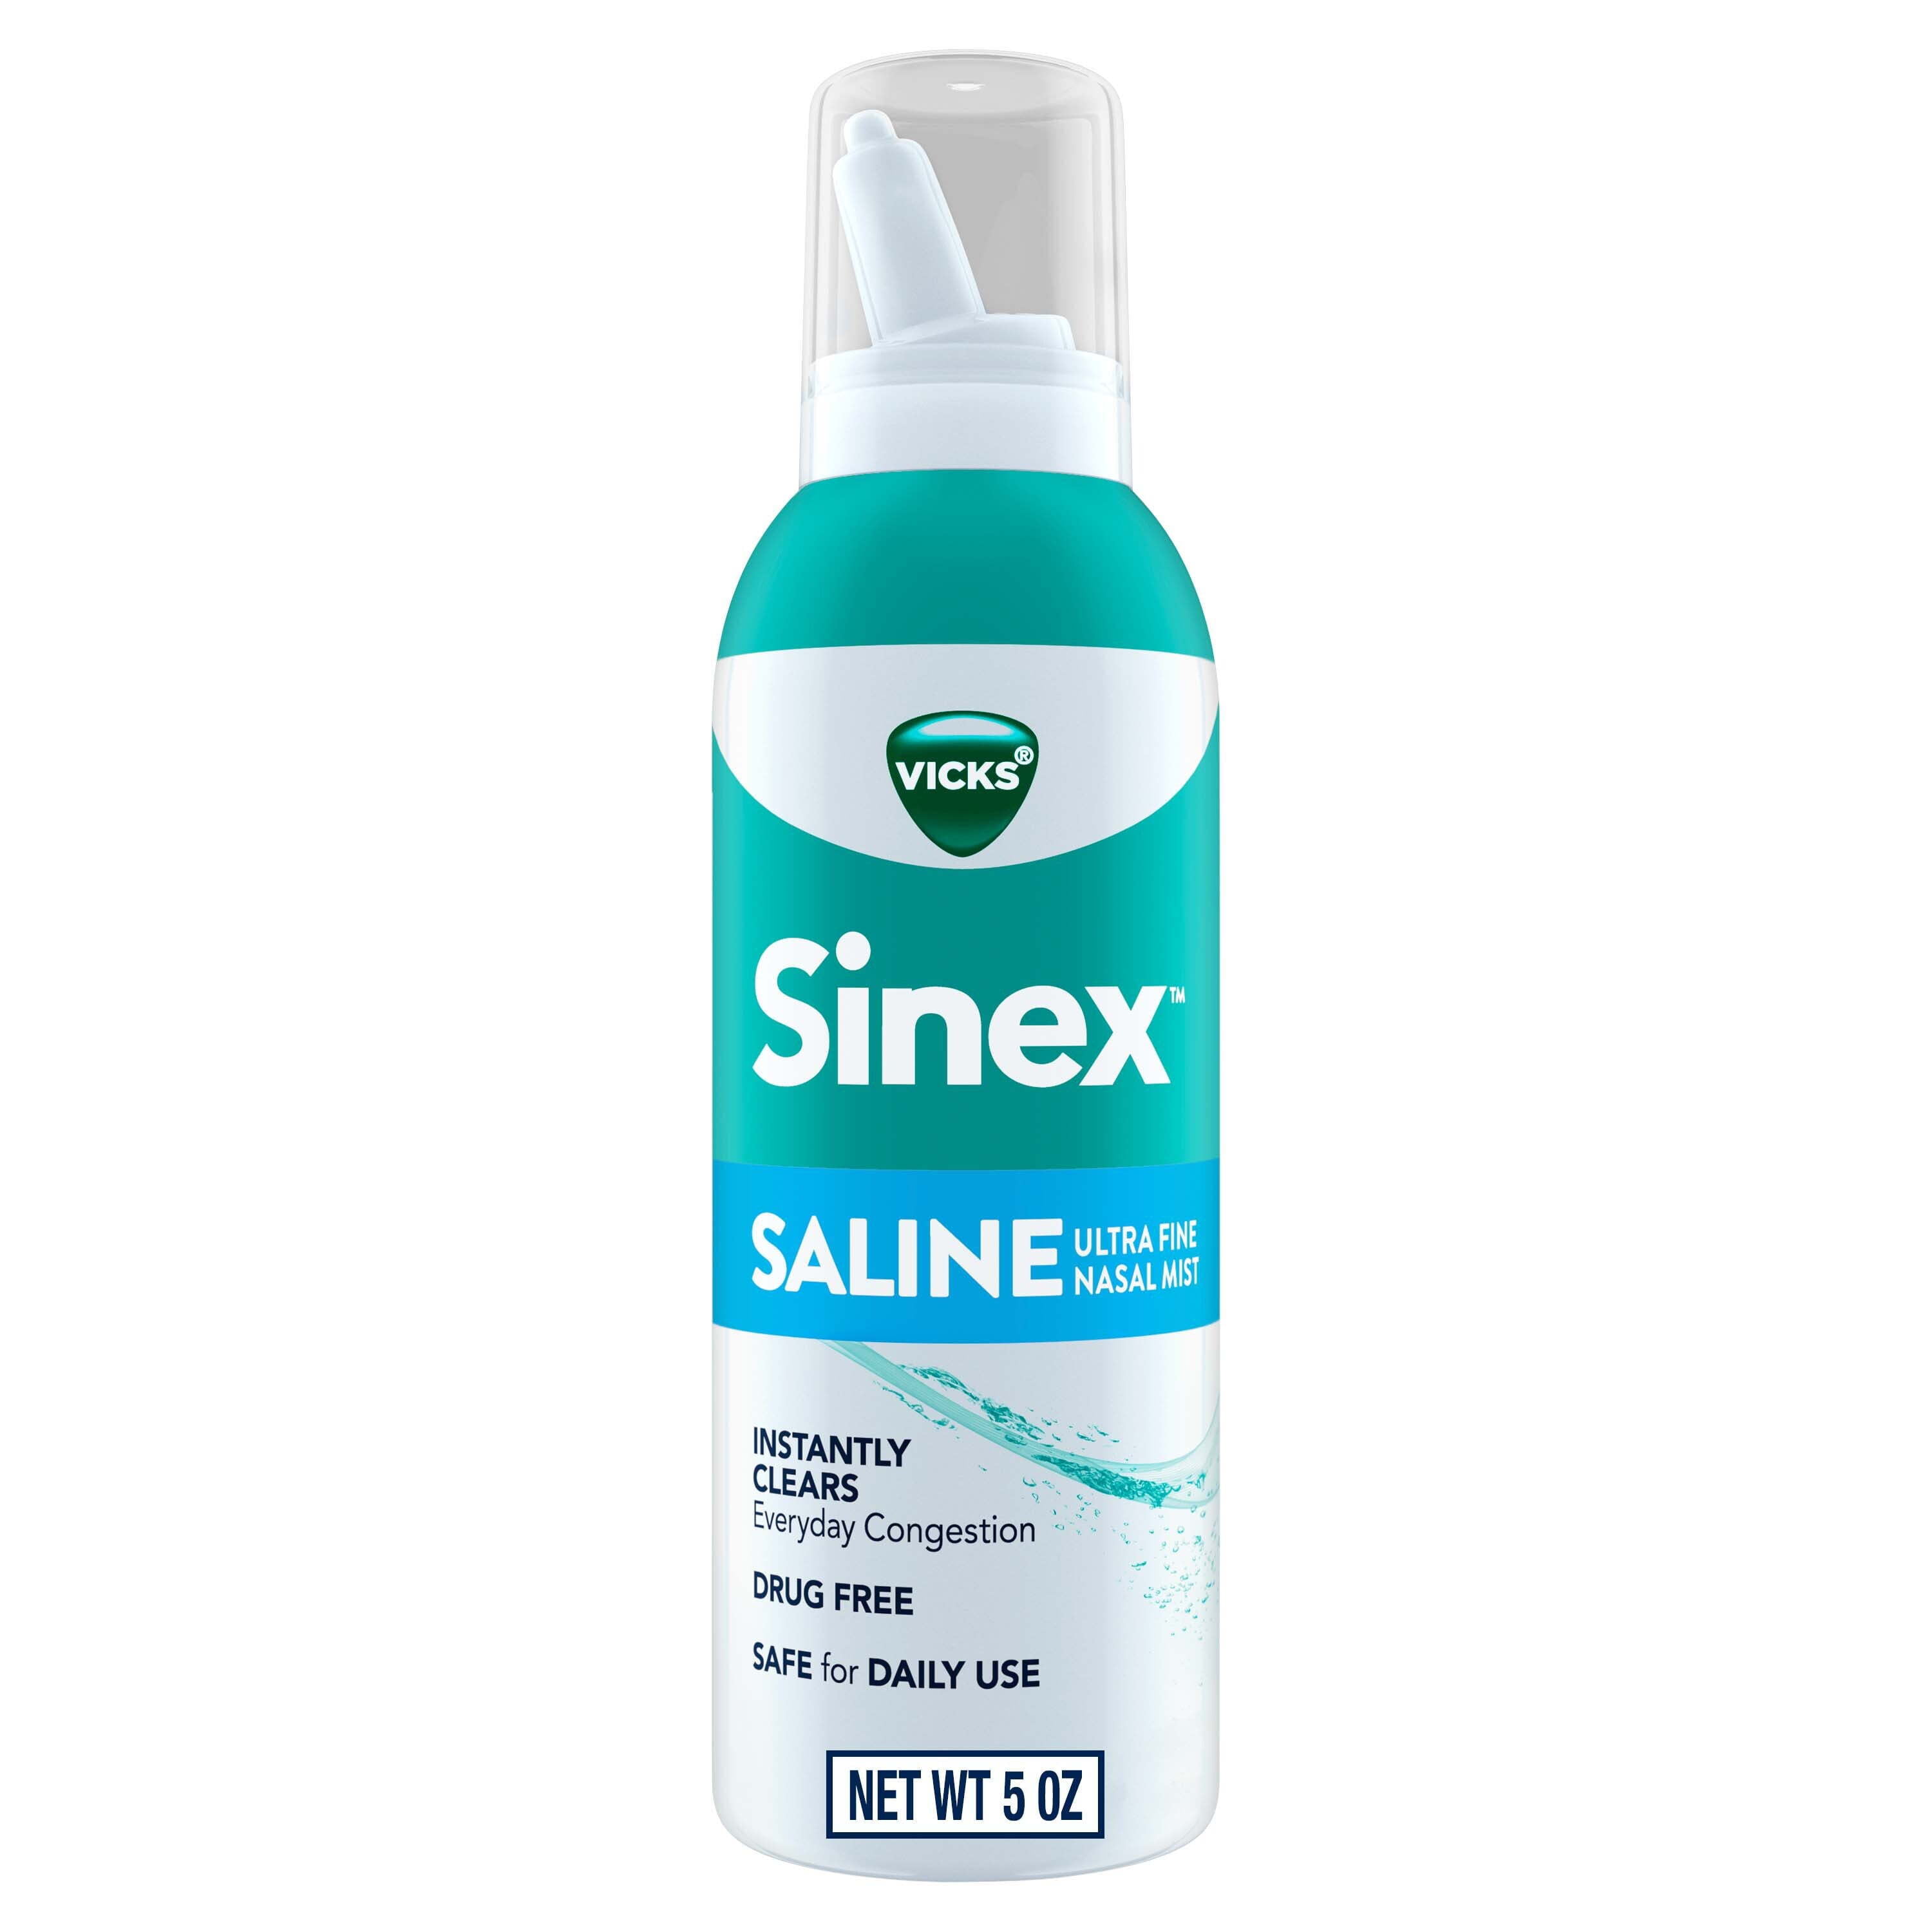 Vicks Sinex Saline Ultra Fine Nasal Mist, Drug Free, 5 Oz